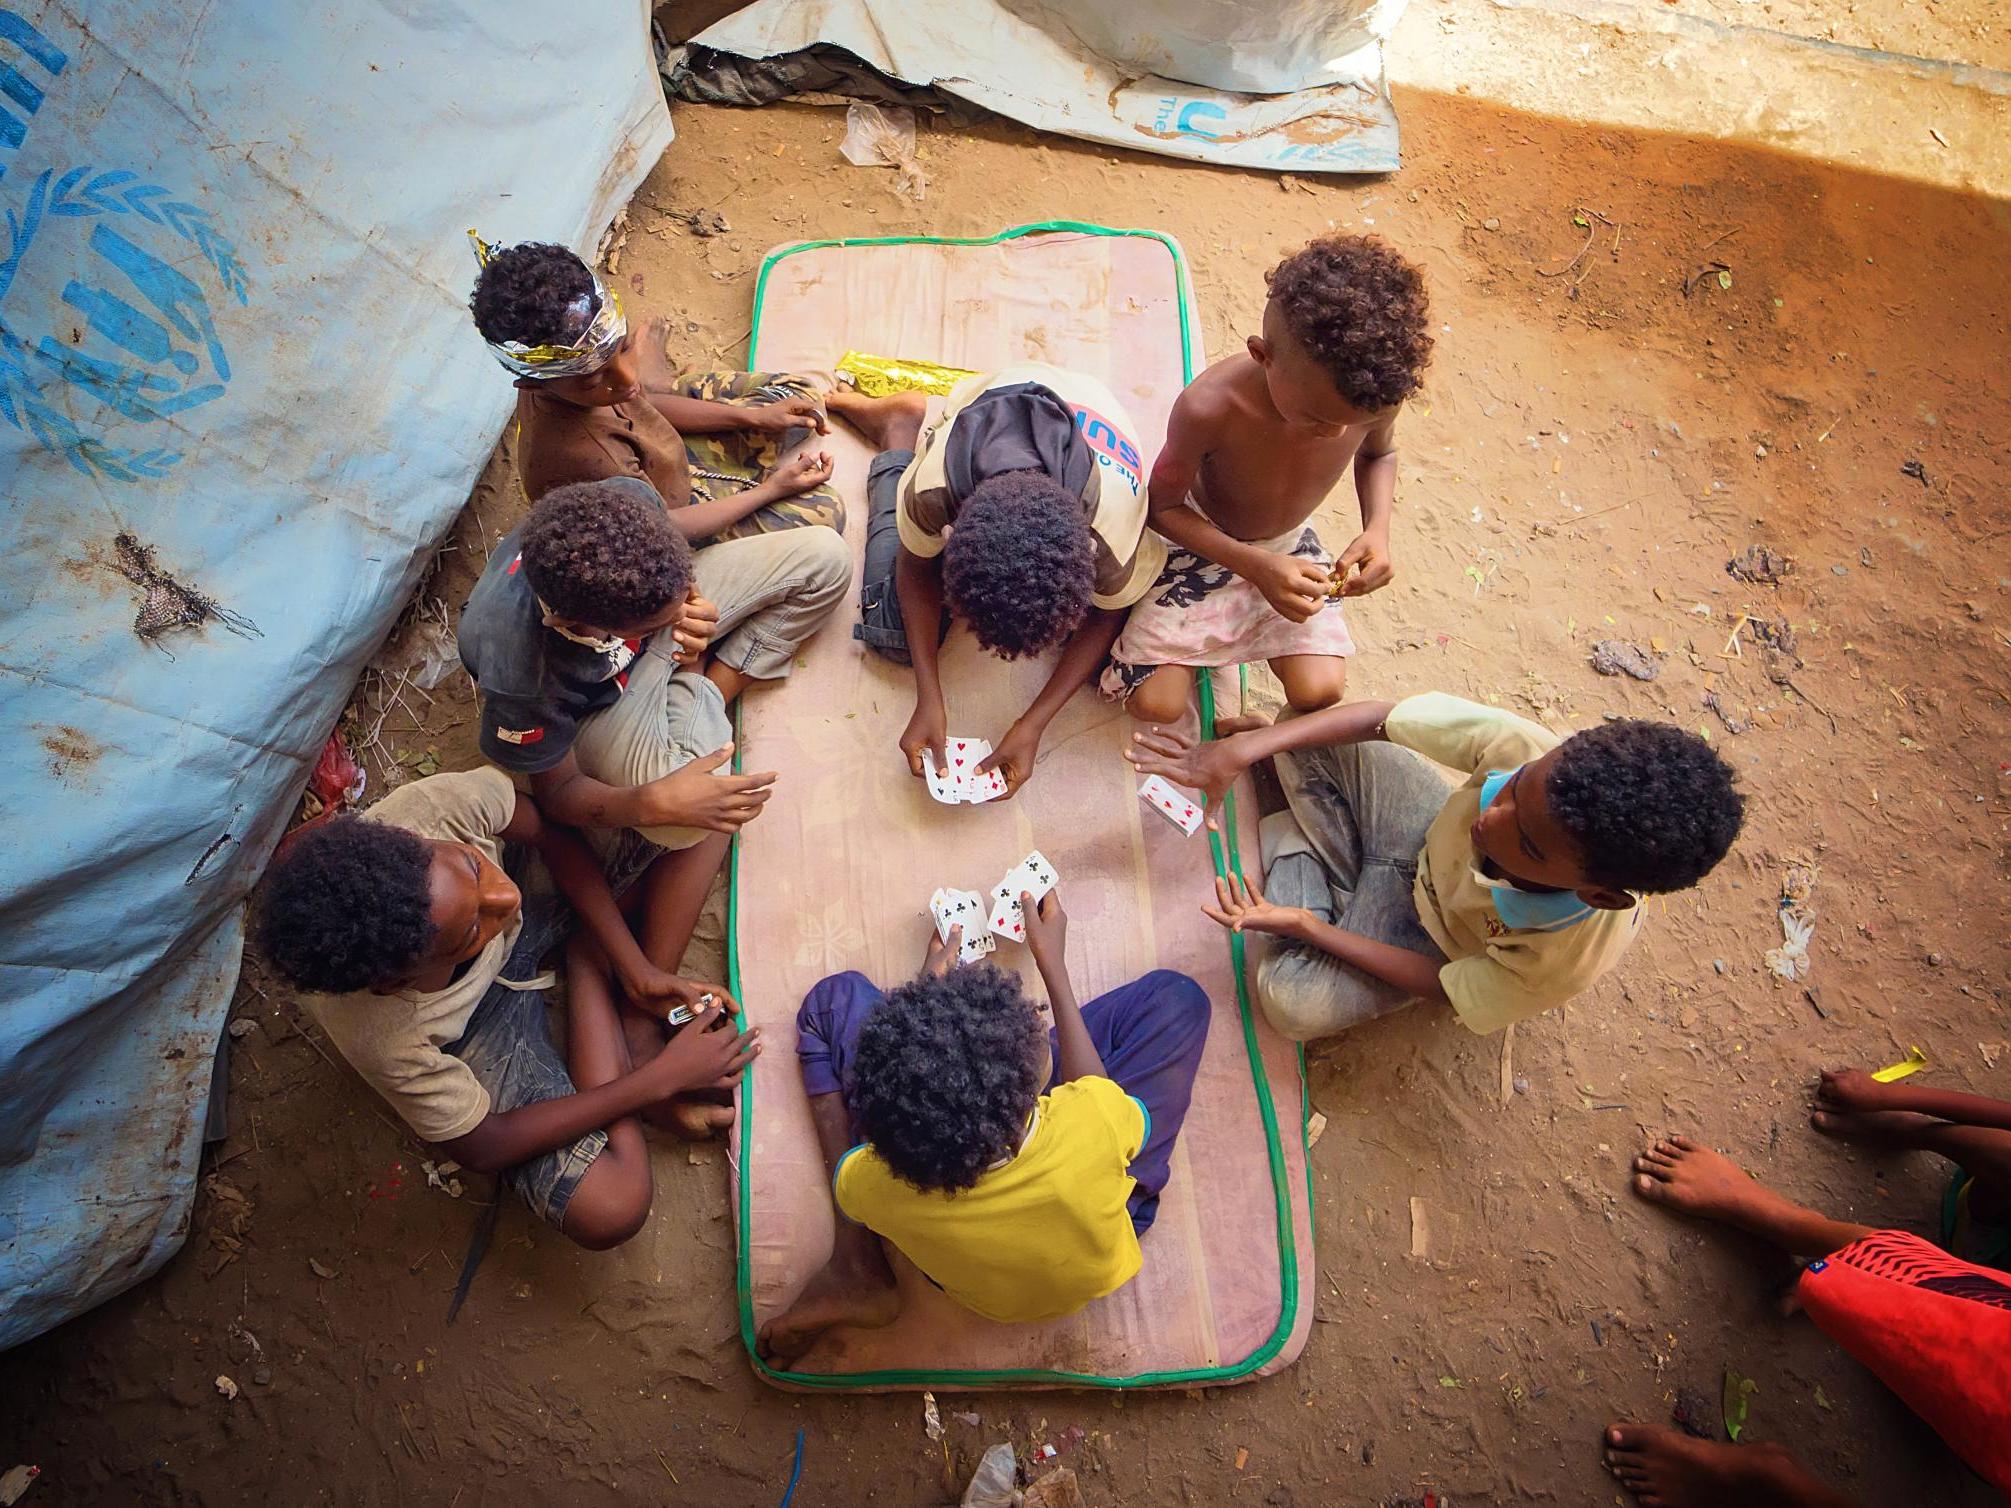 Children play cards in a camp in Yemen